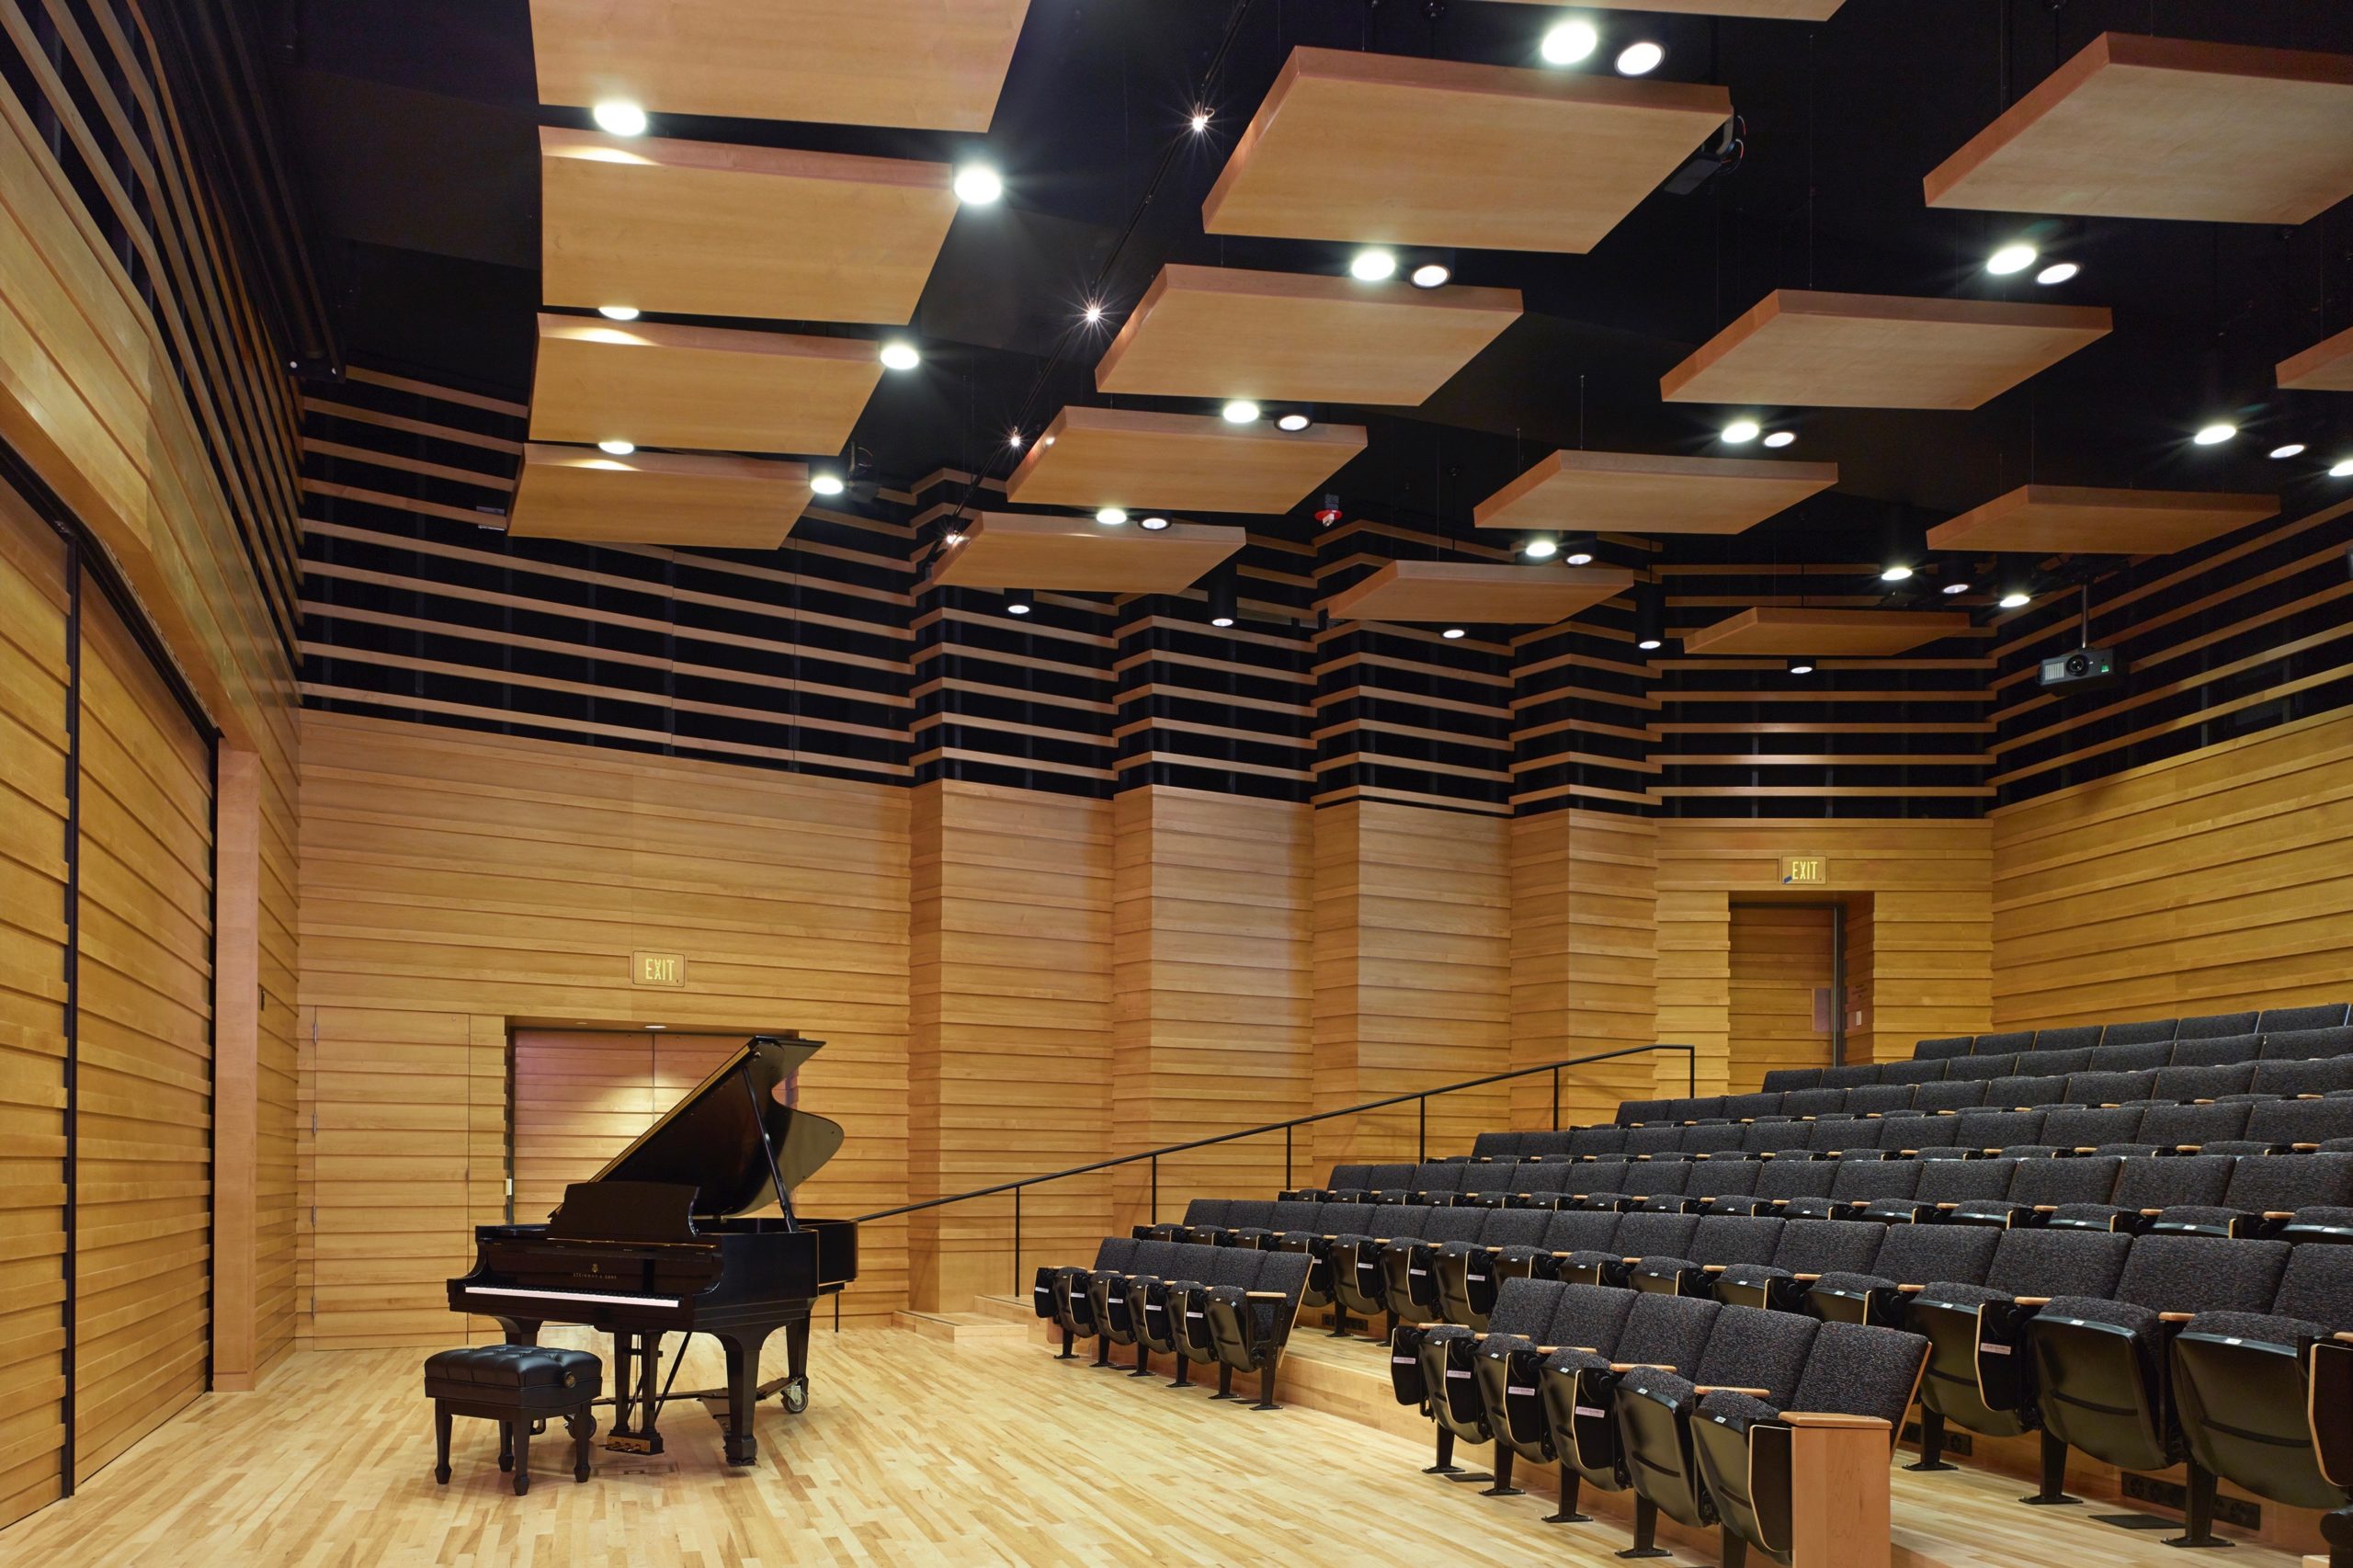 Harvey Mudd Drinkward recital hall - piano and lecture hall seating